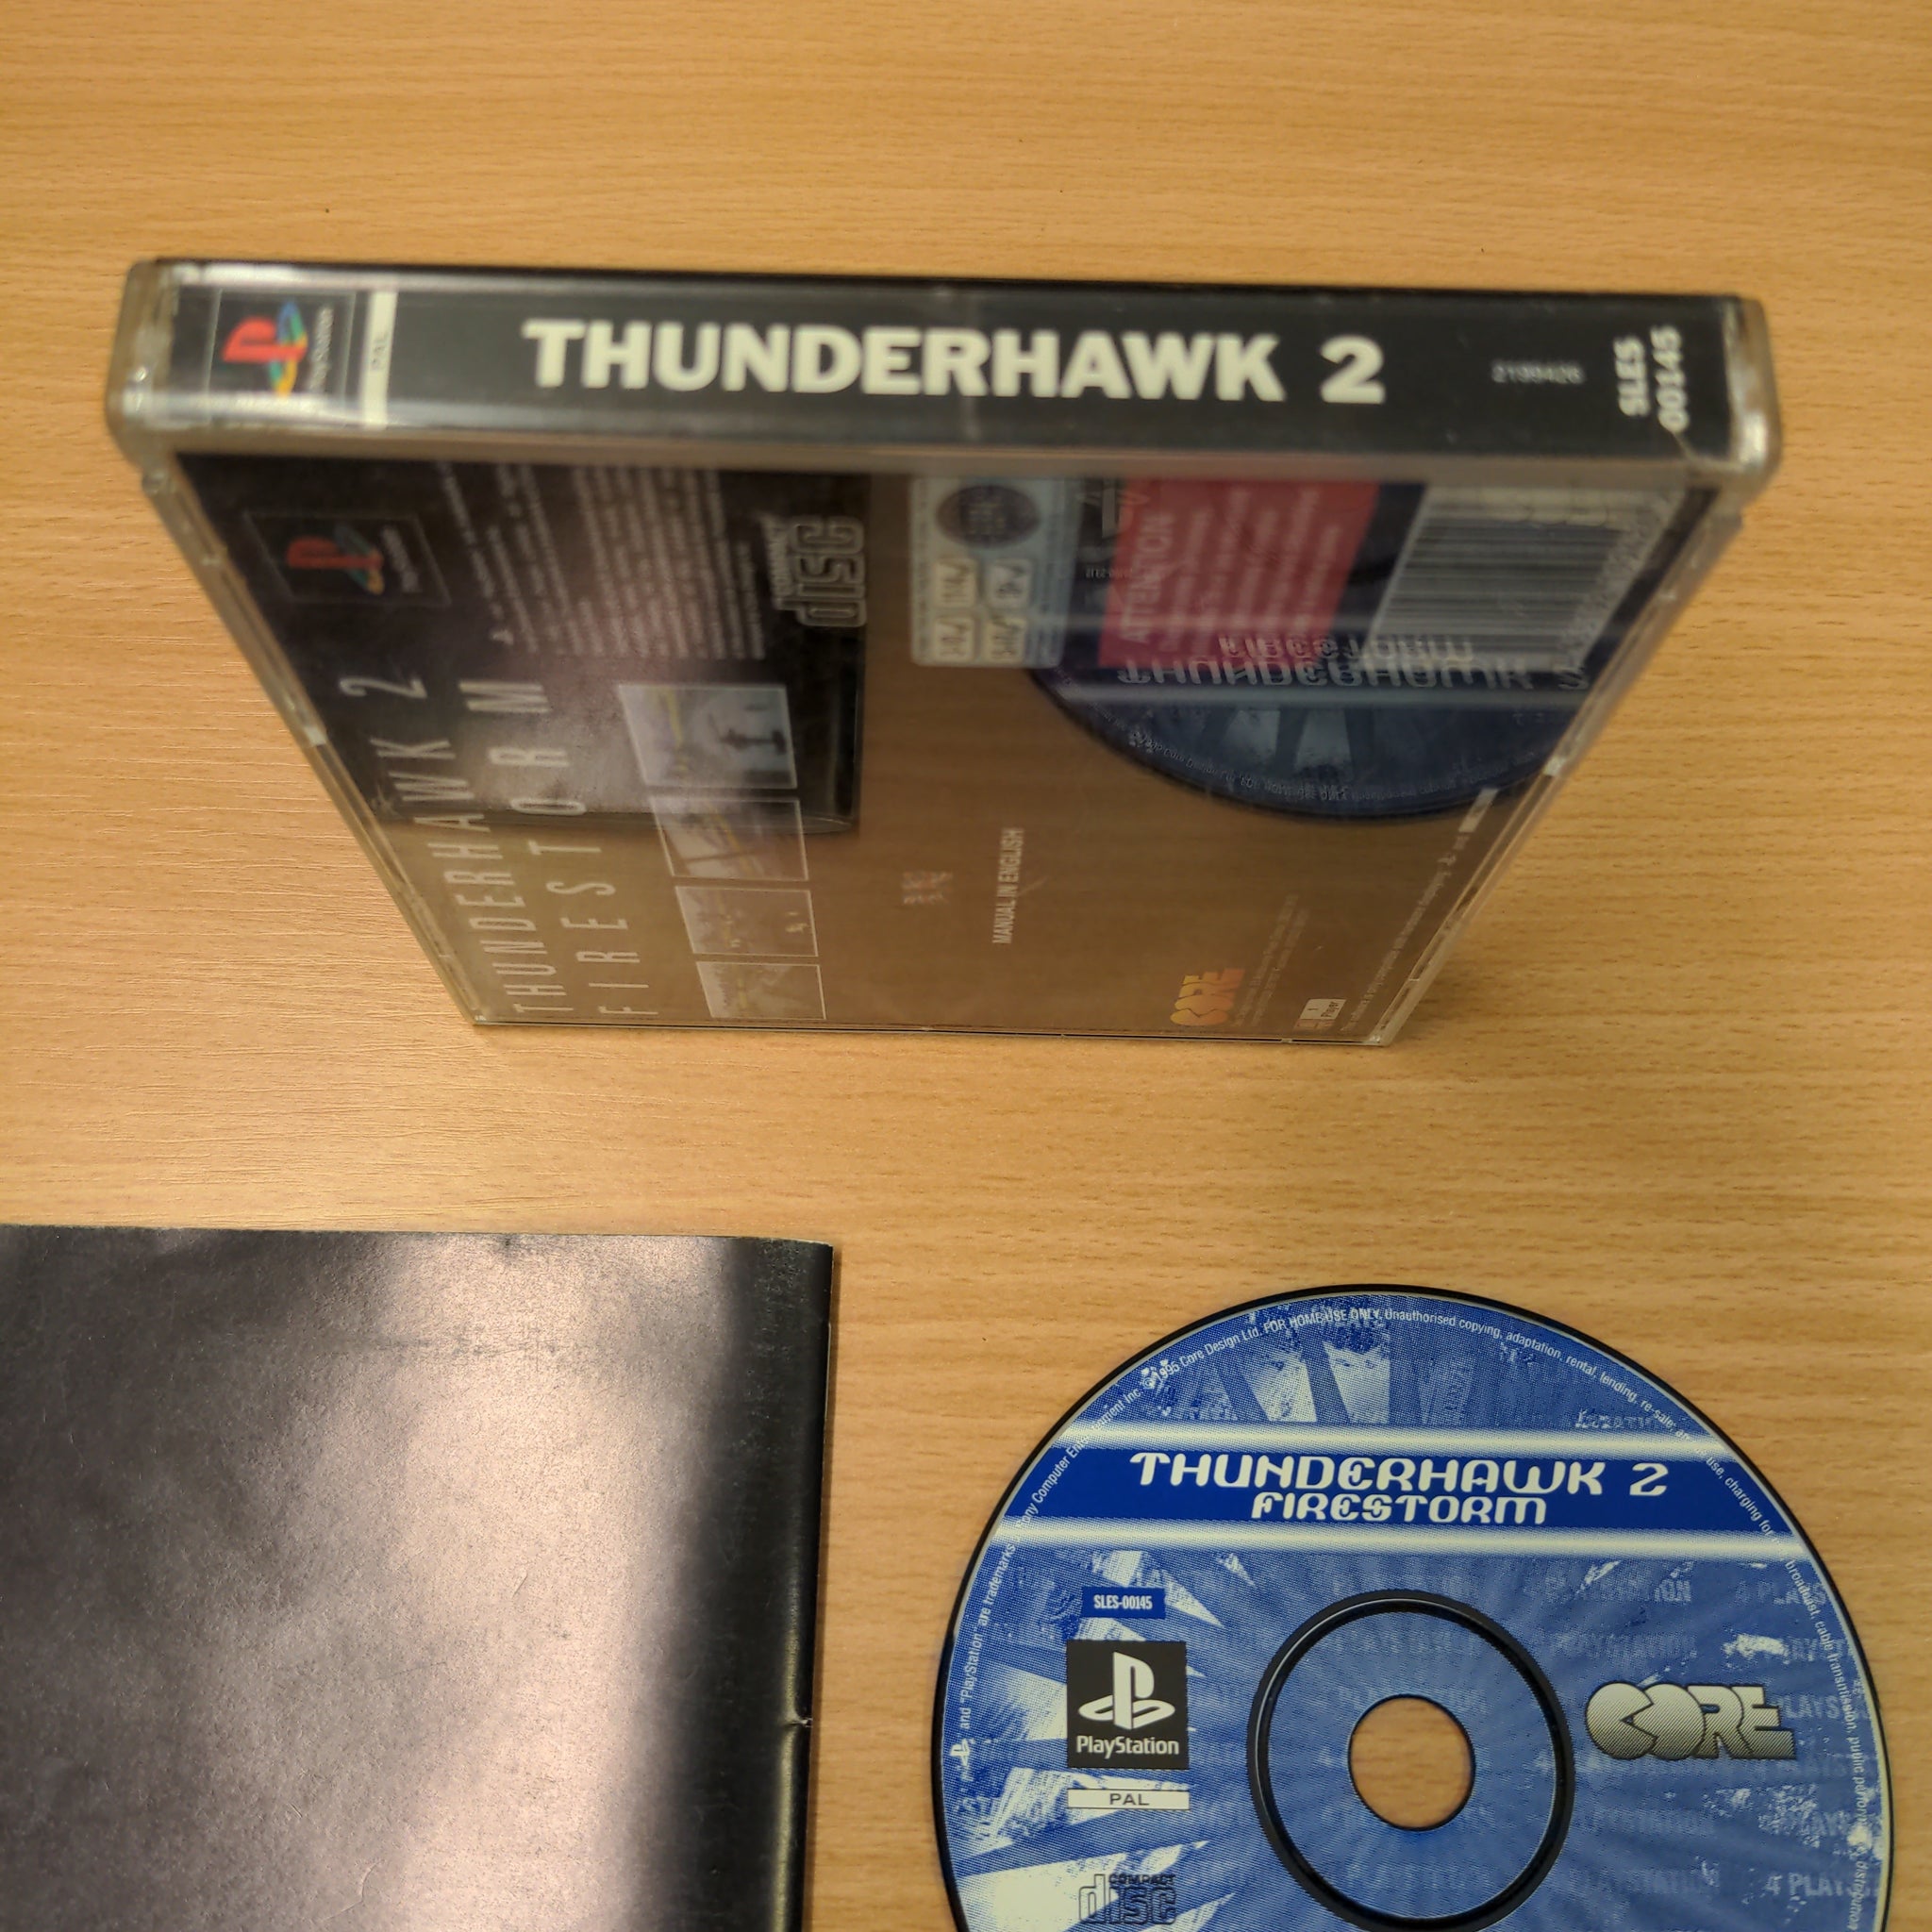 Thunderhawk 2 Firestorm (Multi pack) Sony PS1 game